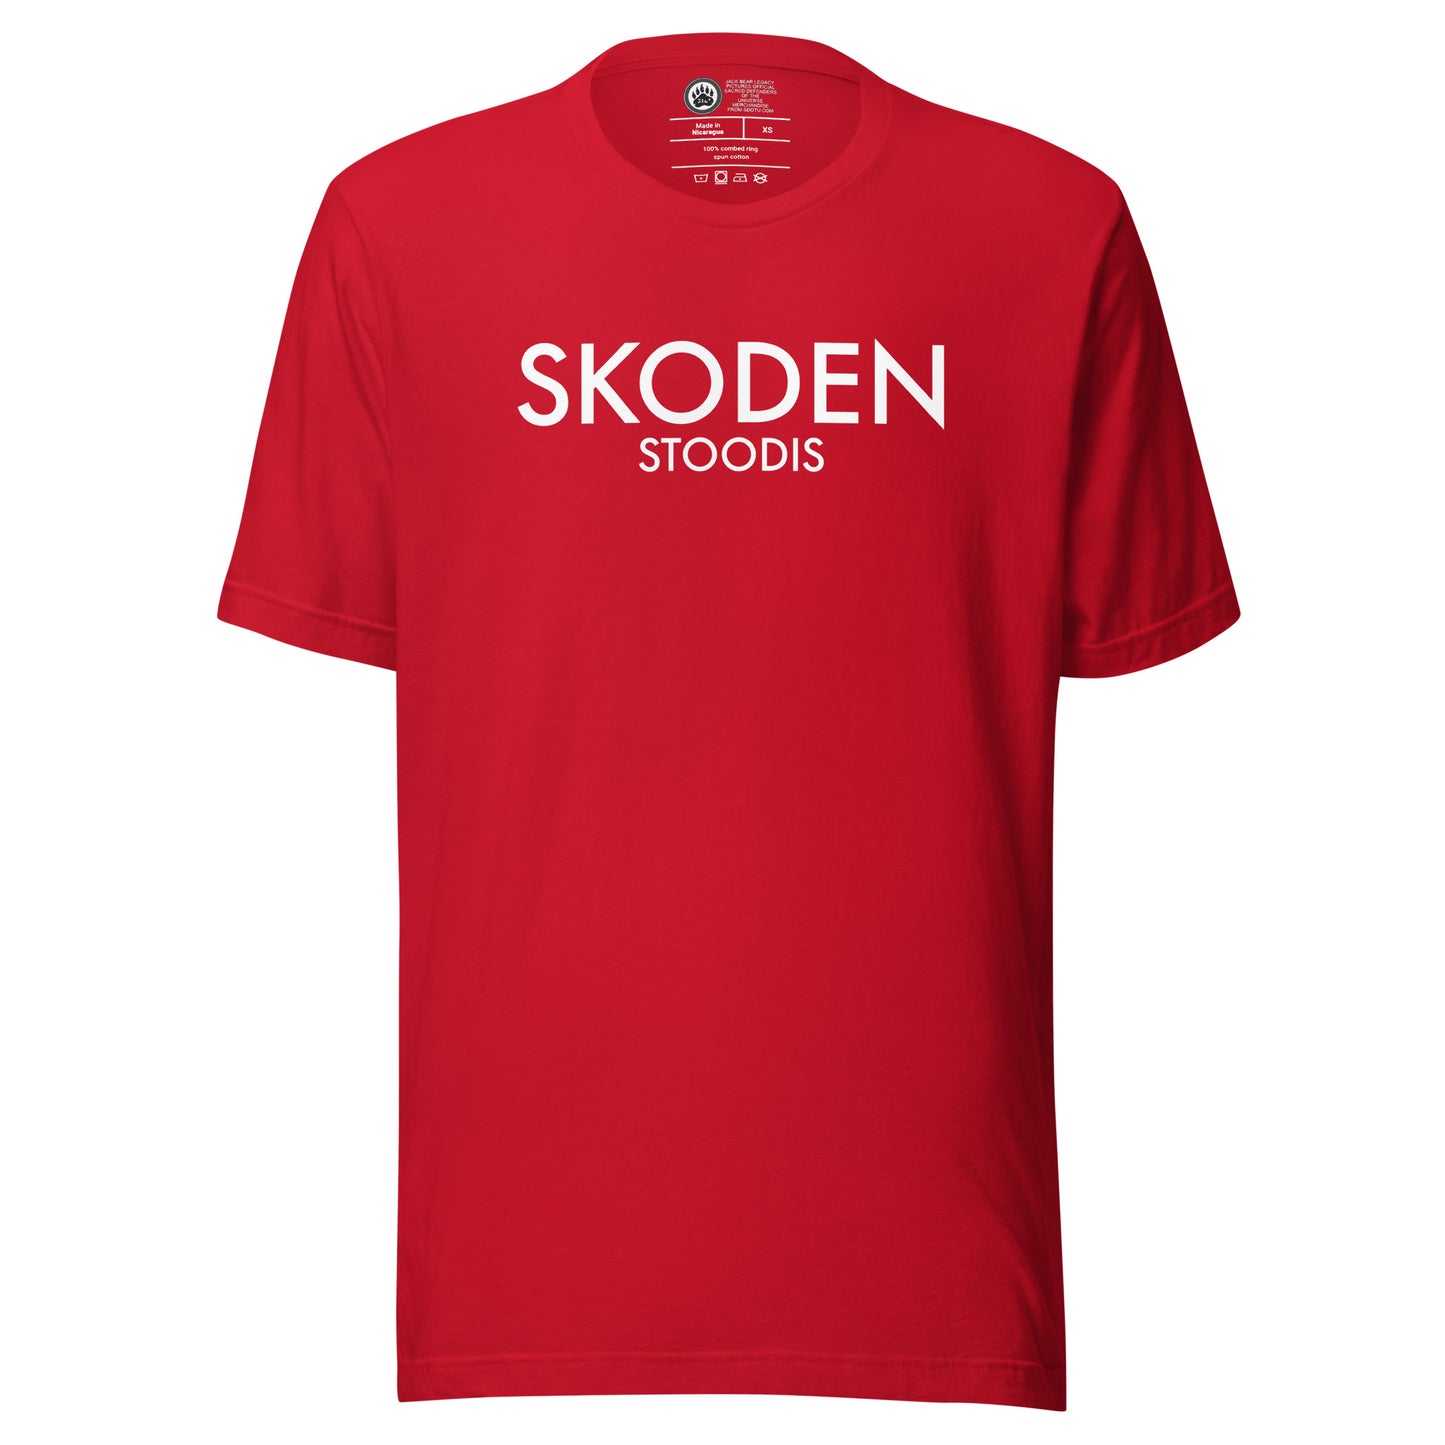 Unisex Skoden Stoodis t-shirt